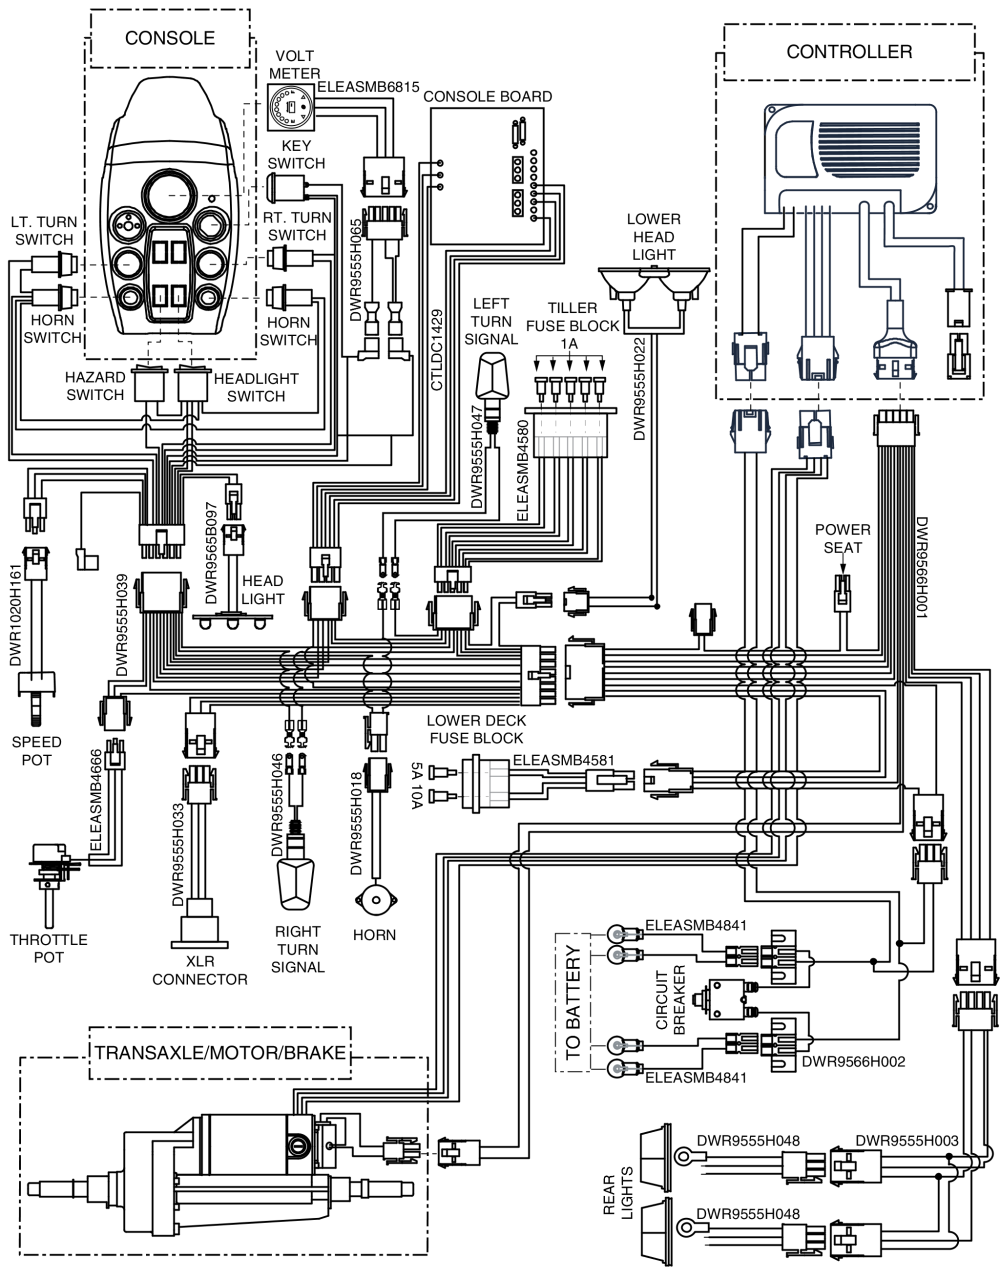 Electrical System Diagram, Celebrity Xl parts diagram